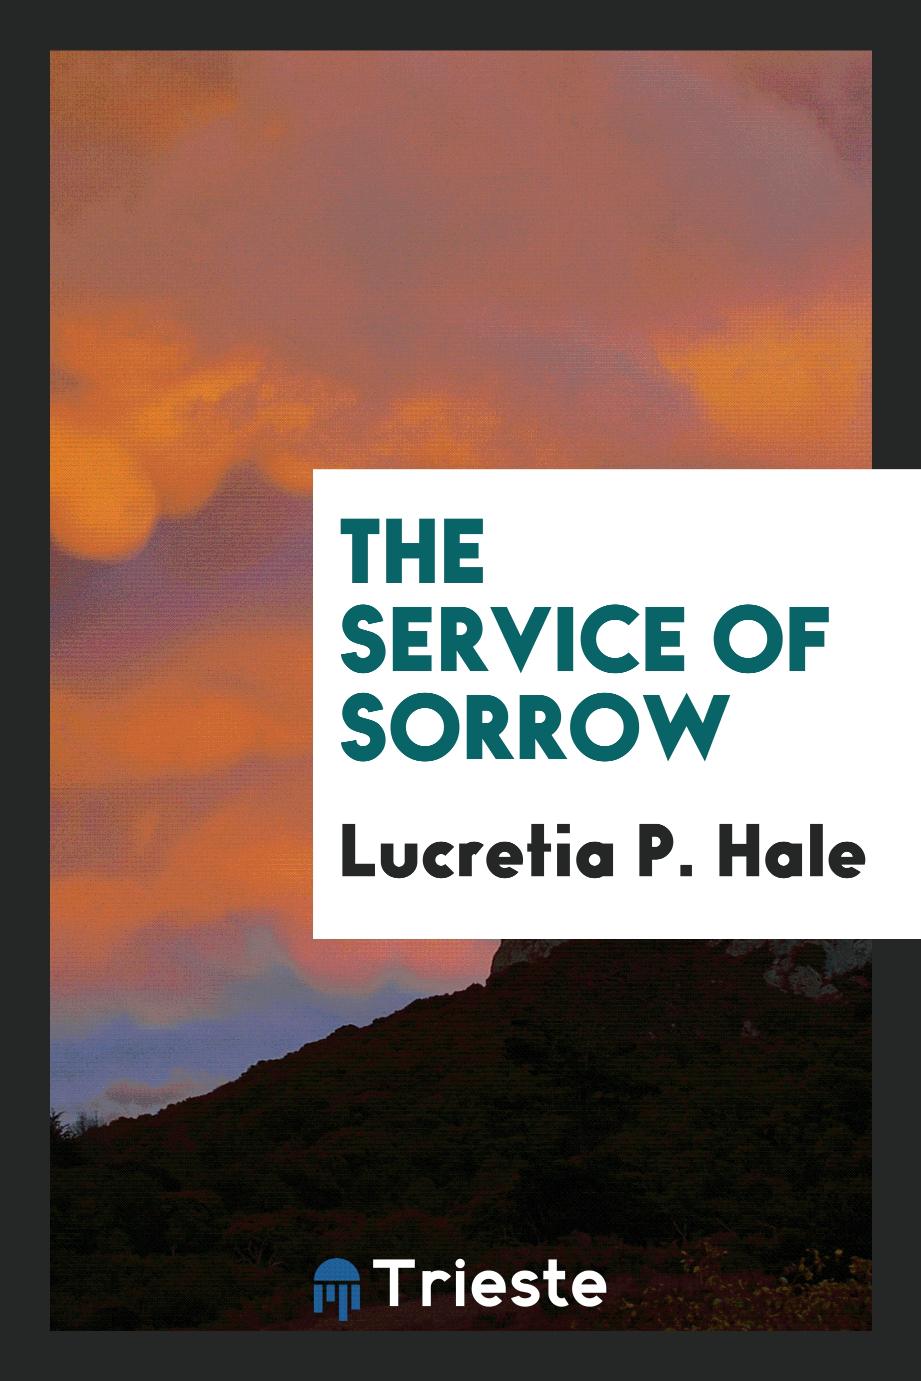 The service of sorrow